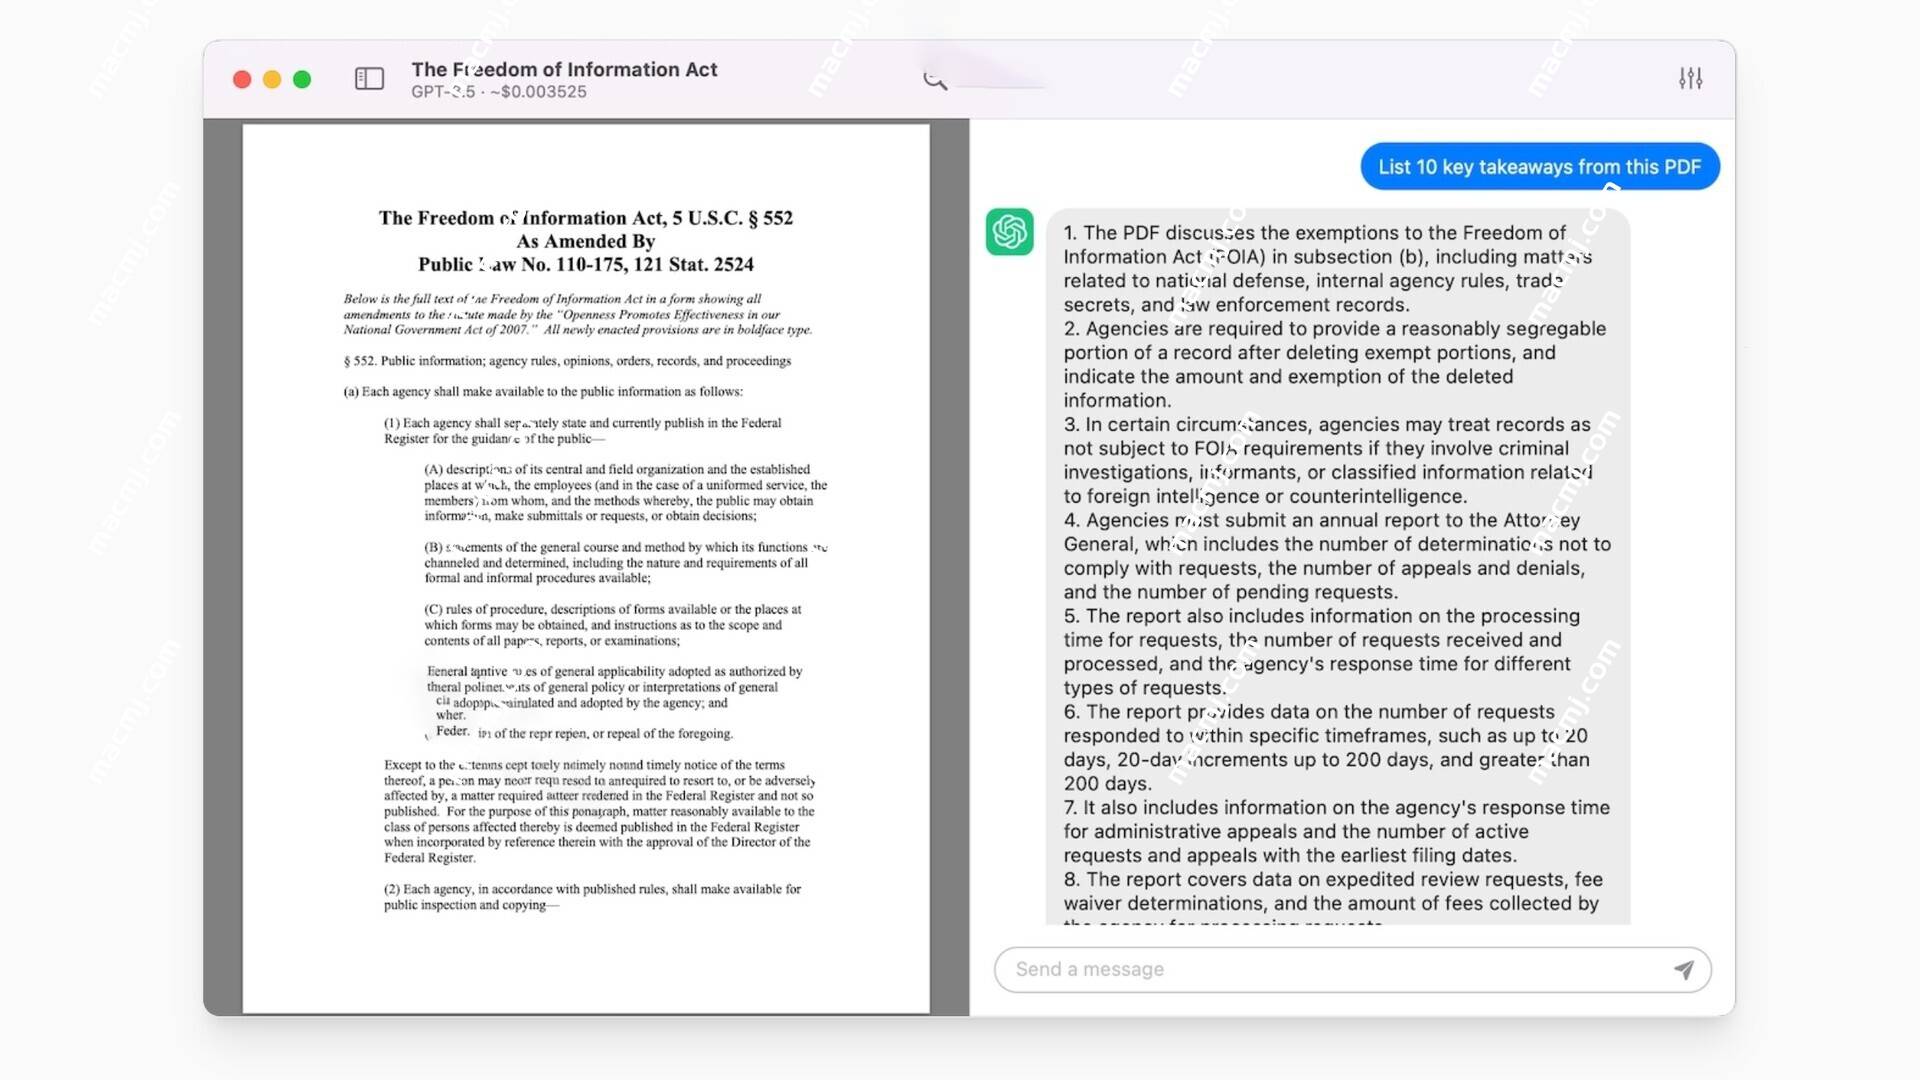 PDF Pals for Mac(PDF编辑处理软件)